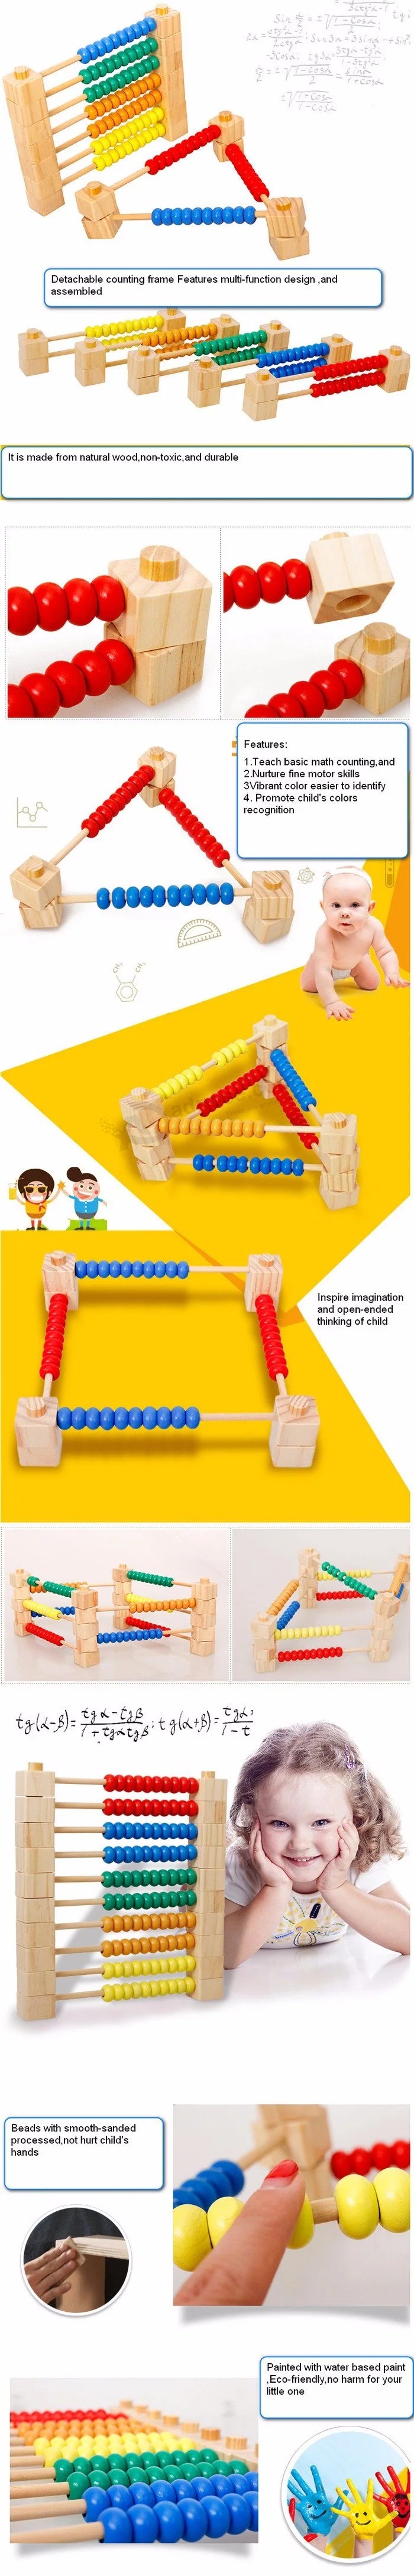 Intelligente ontwikkeling Wiskunde DIY houten kraal doolhof Preschool educatief speelgoed (GY-0004)